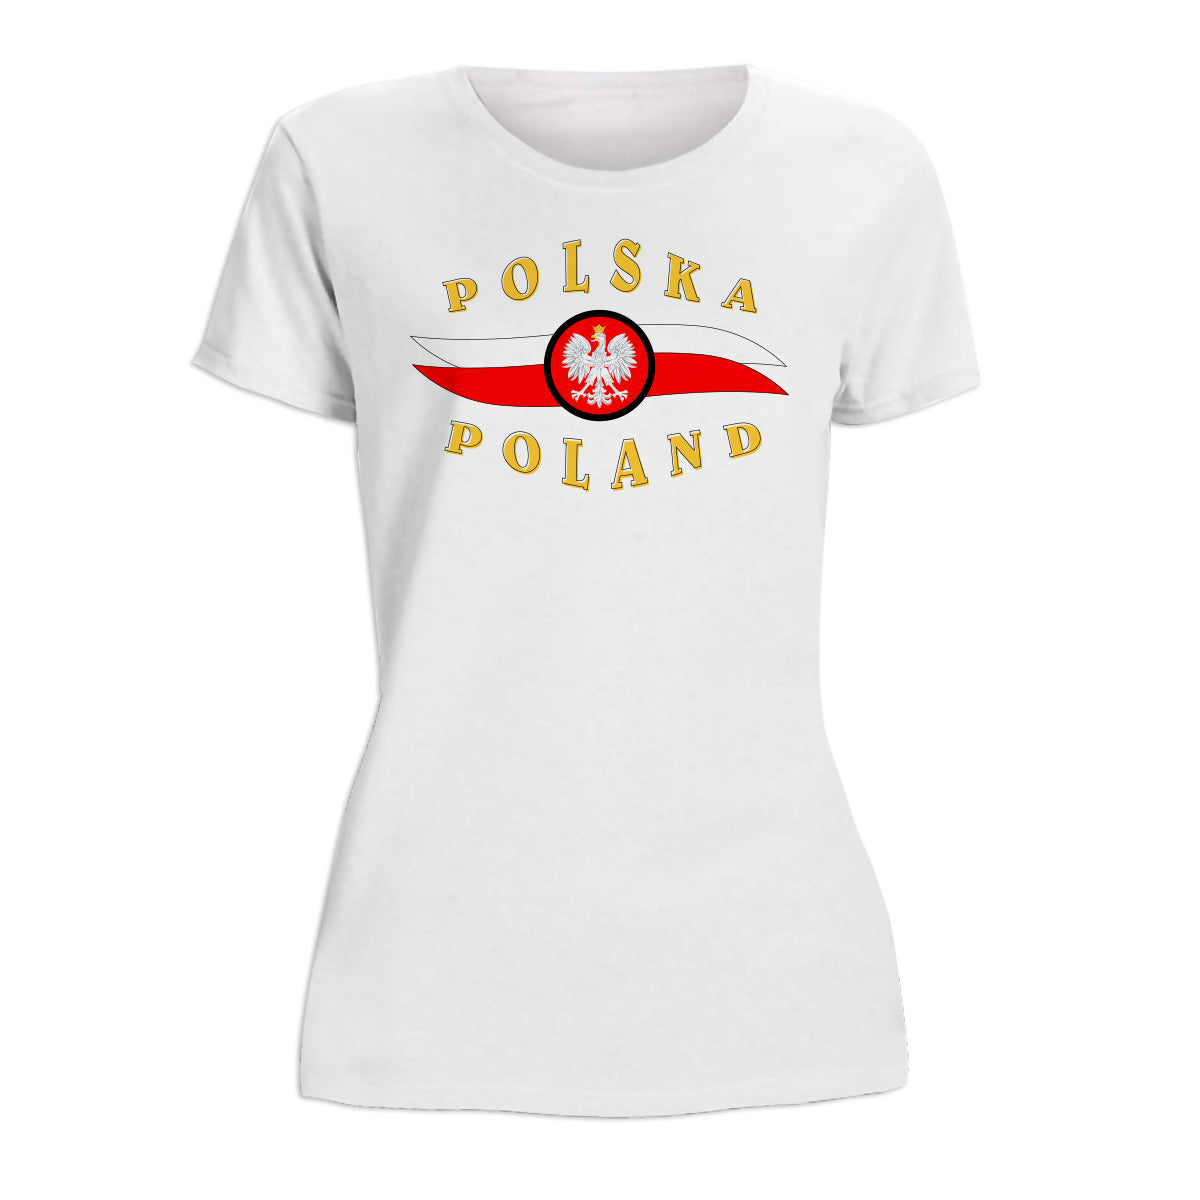 Polska Poland Women's Short Sleeve Tshirt